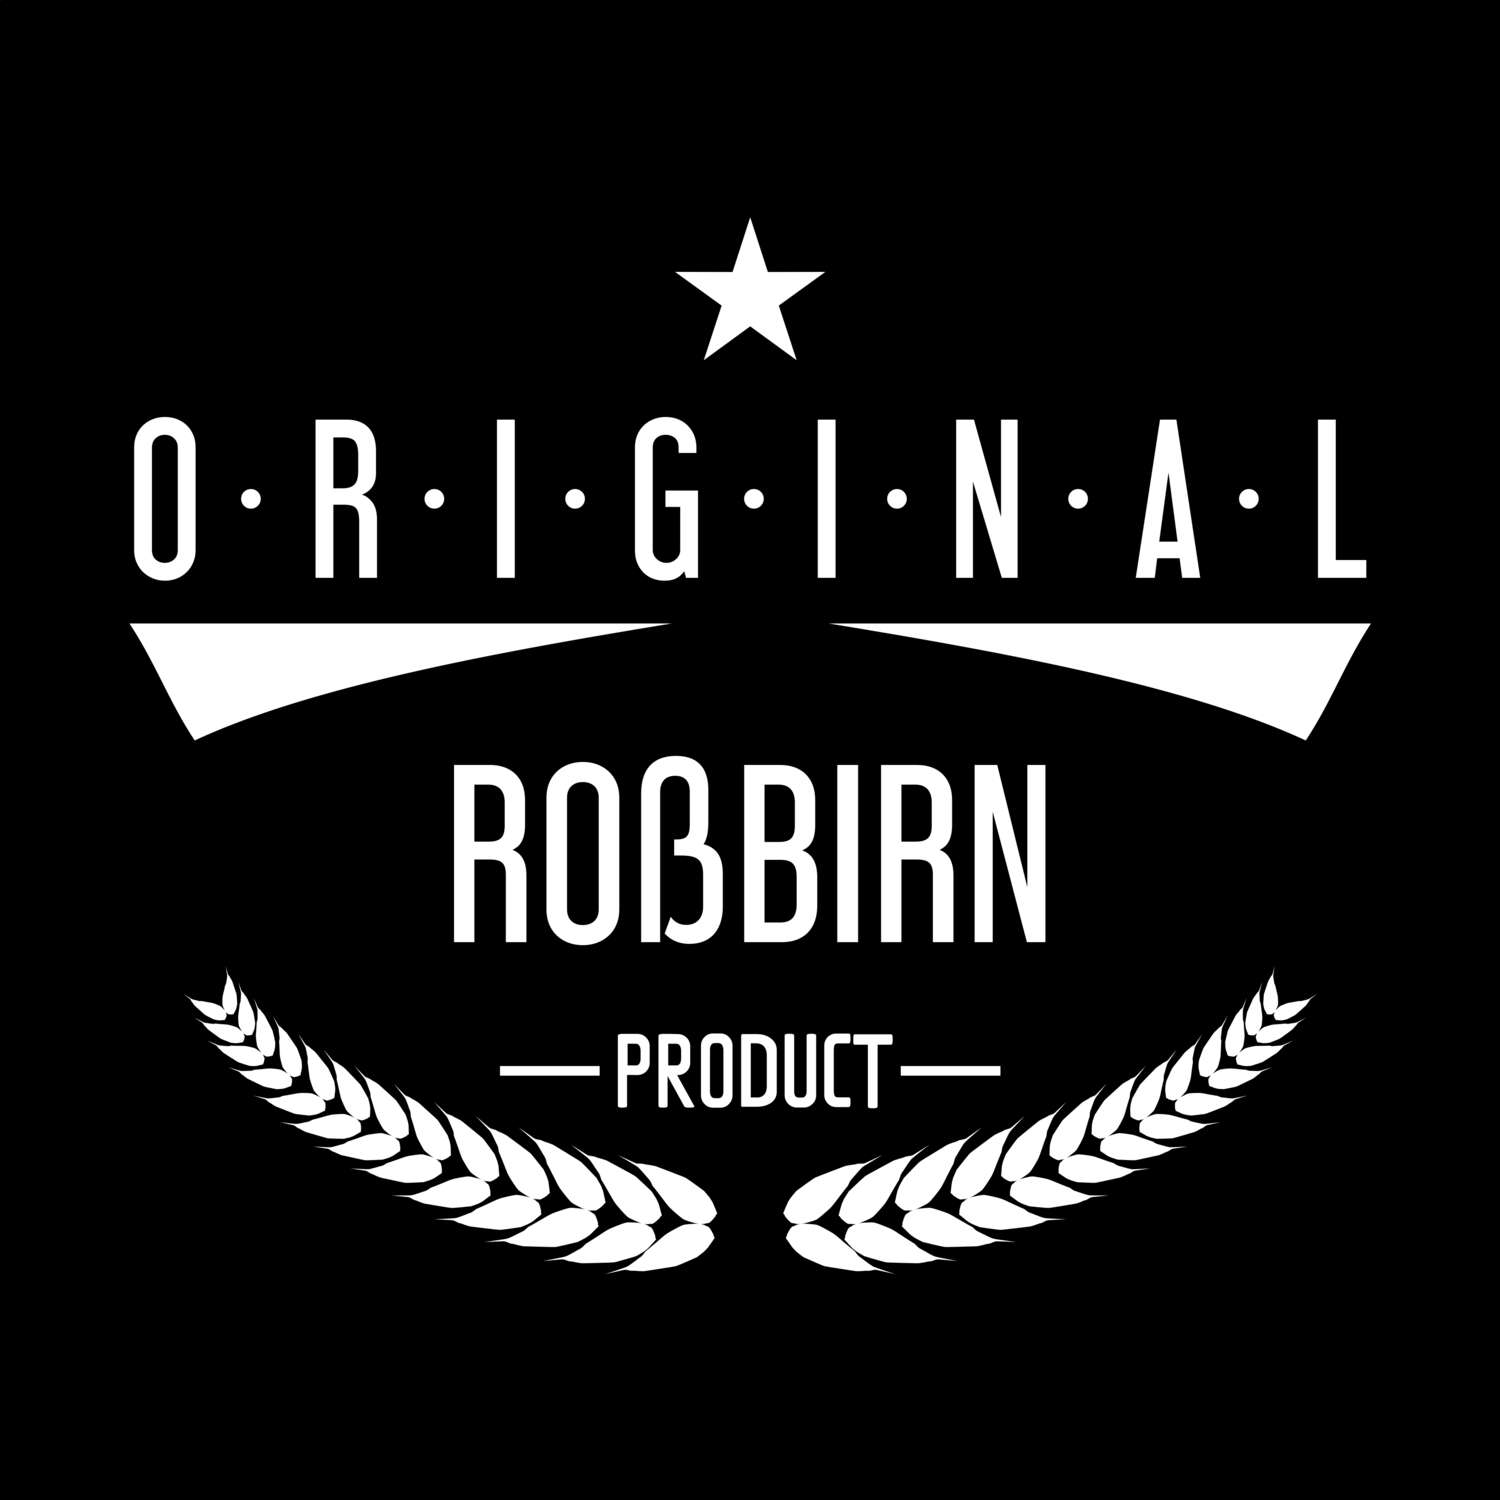 Roßbirn T-Shirt »Original Product«